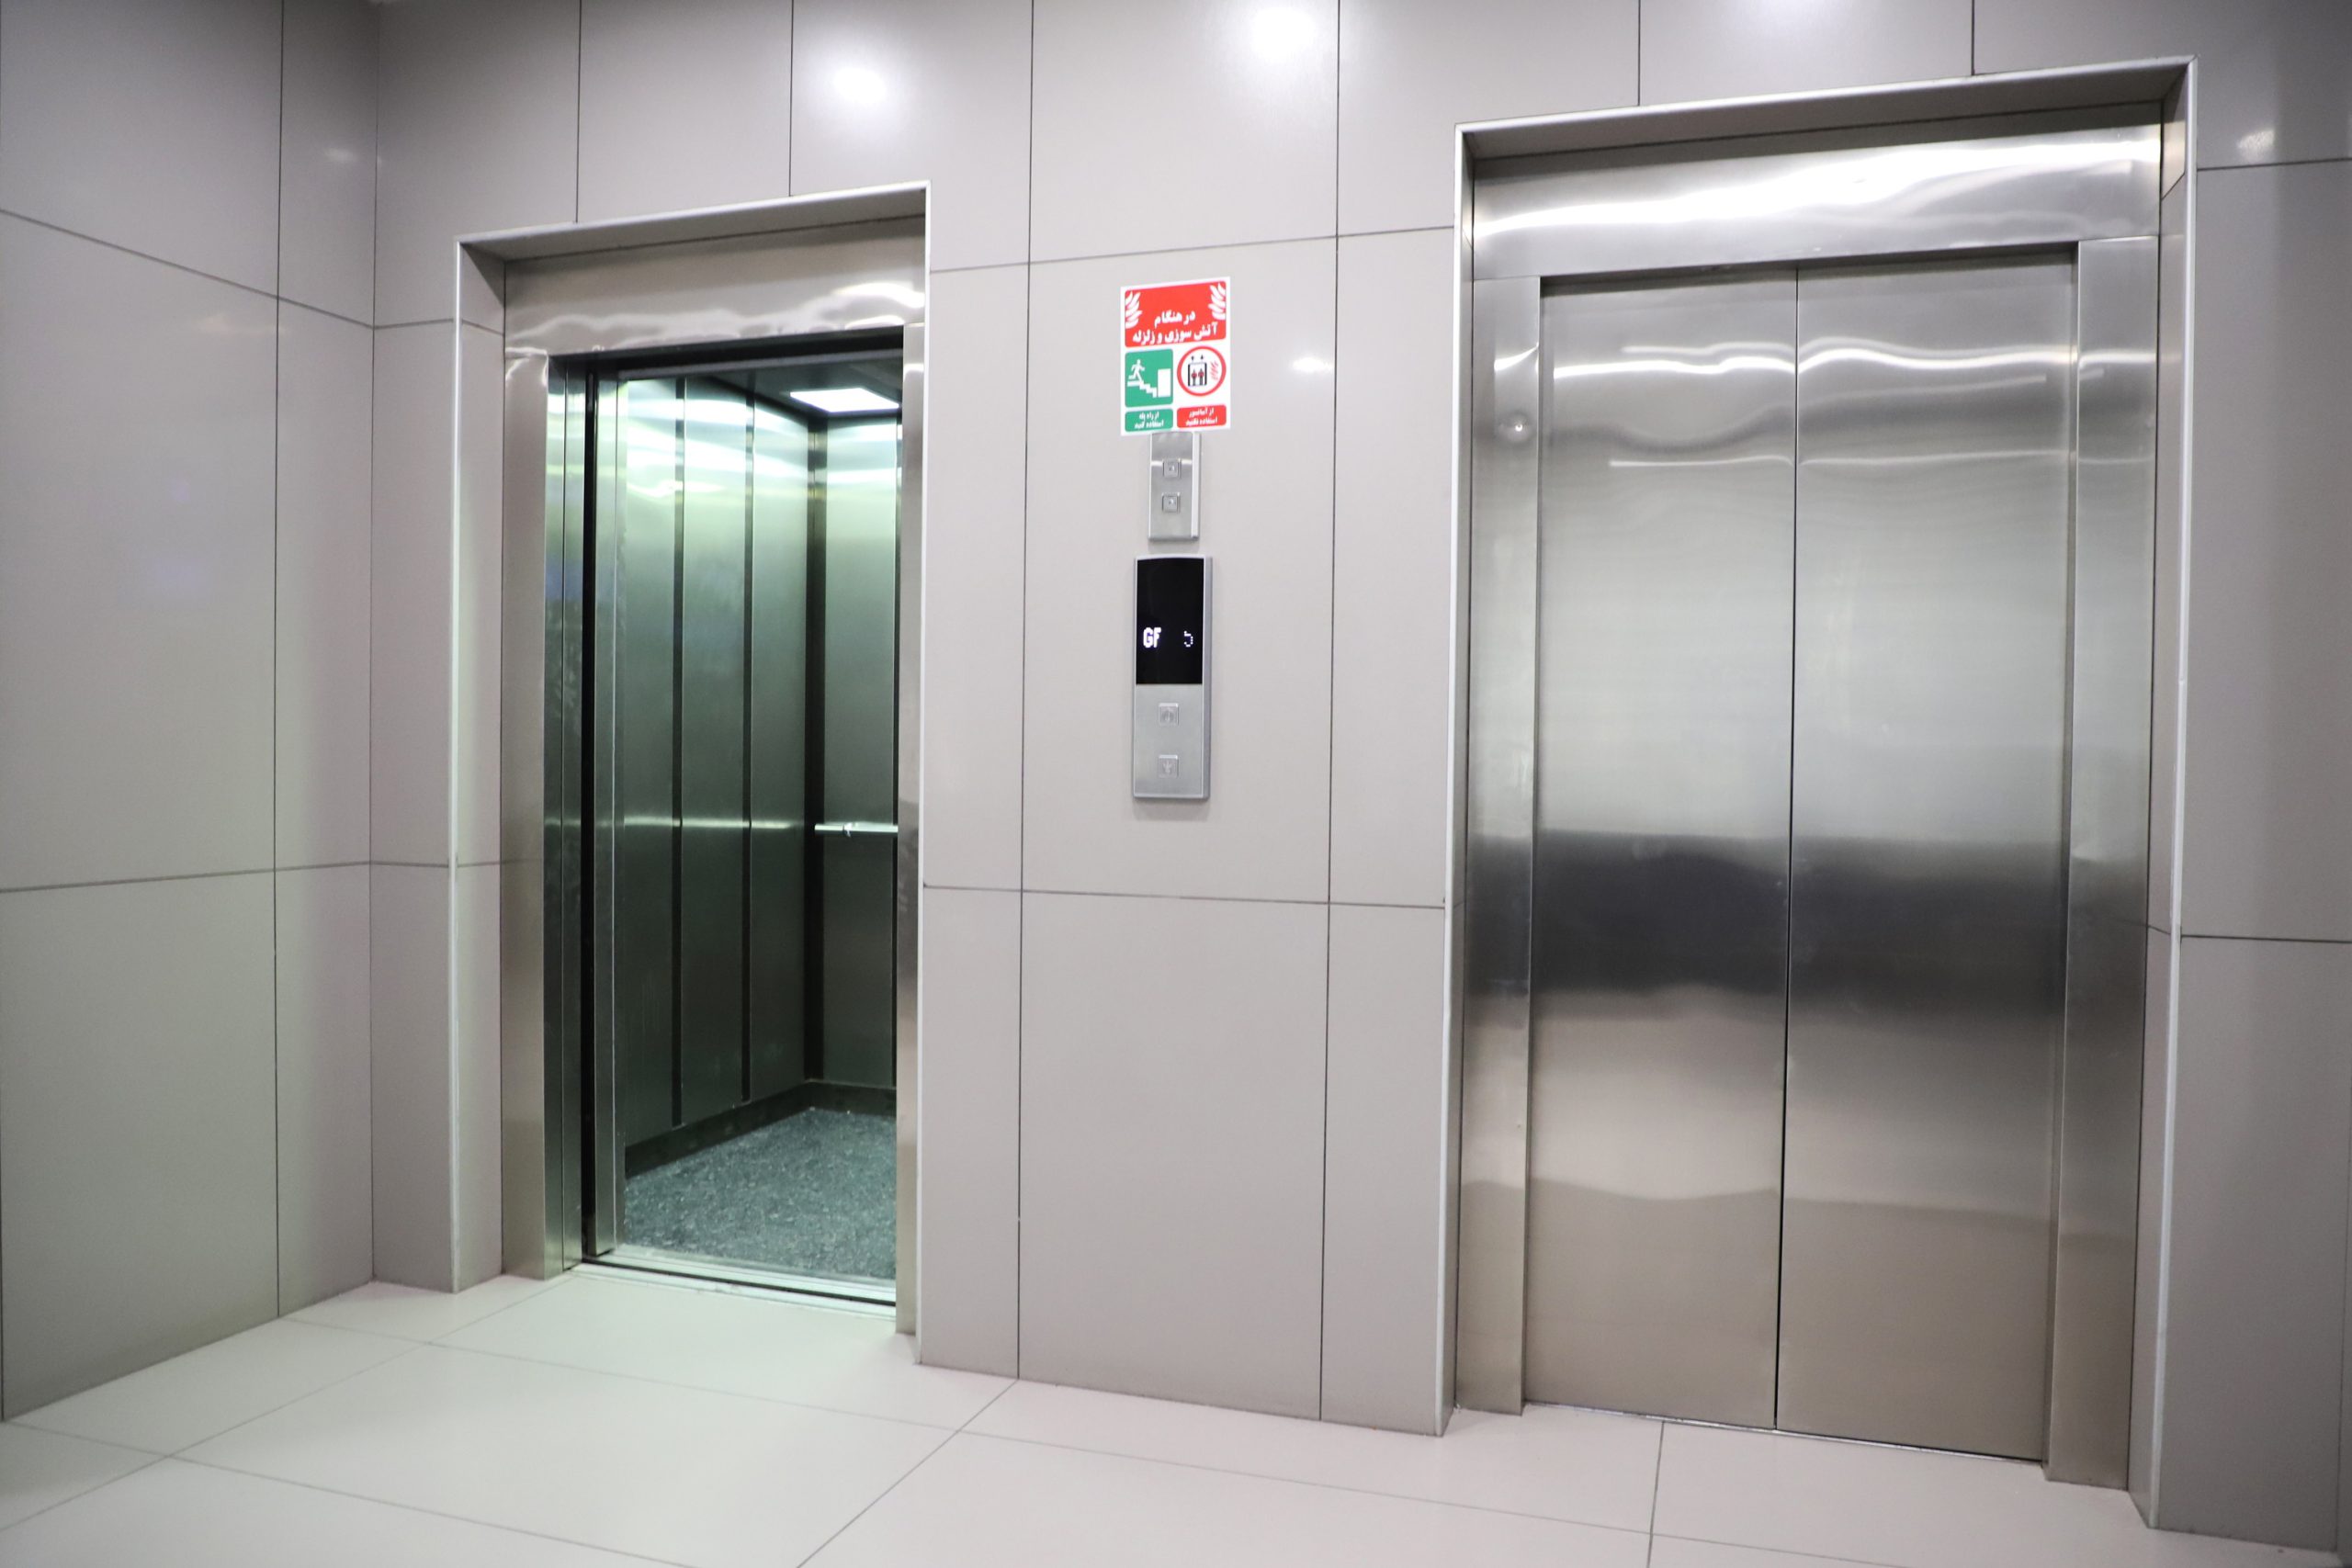 بازرسی آسانسور